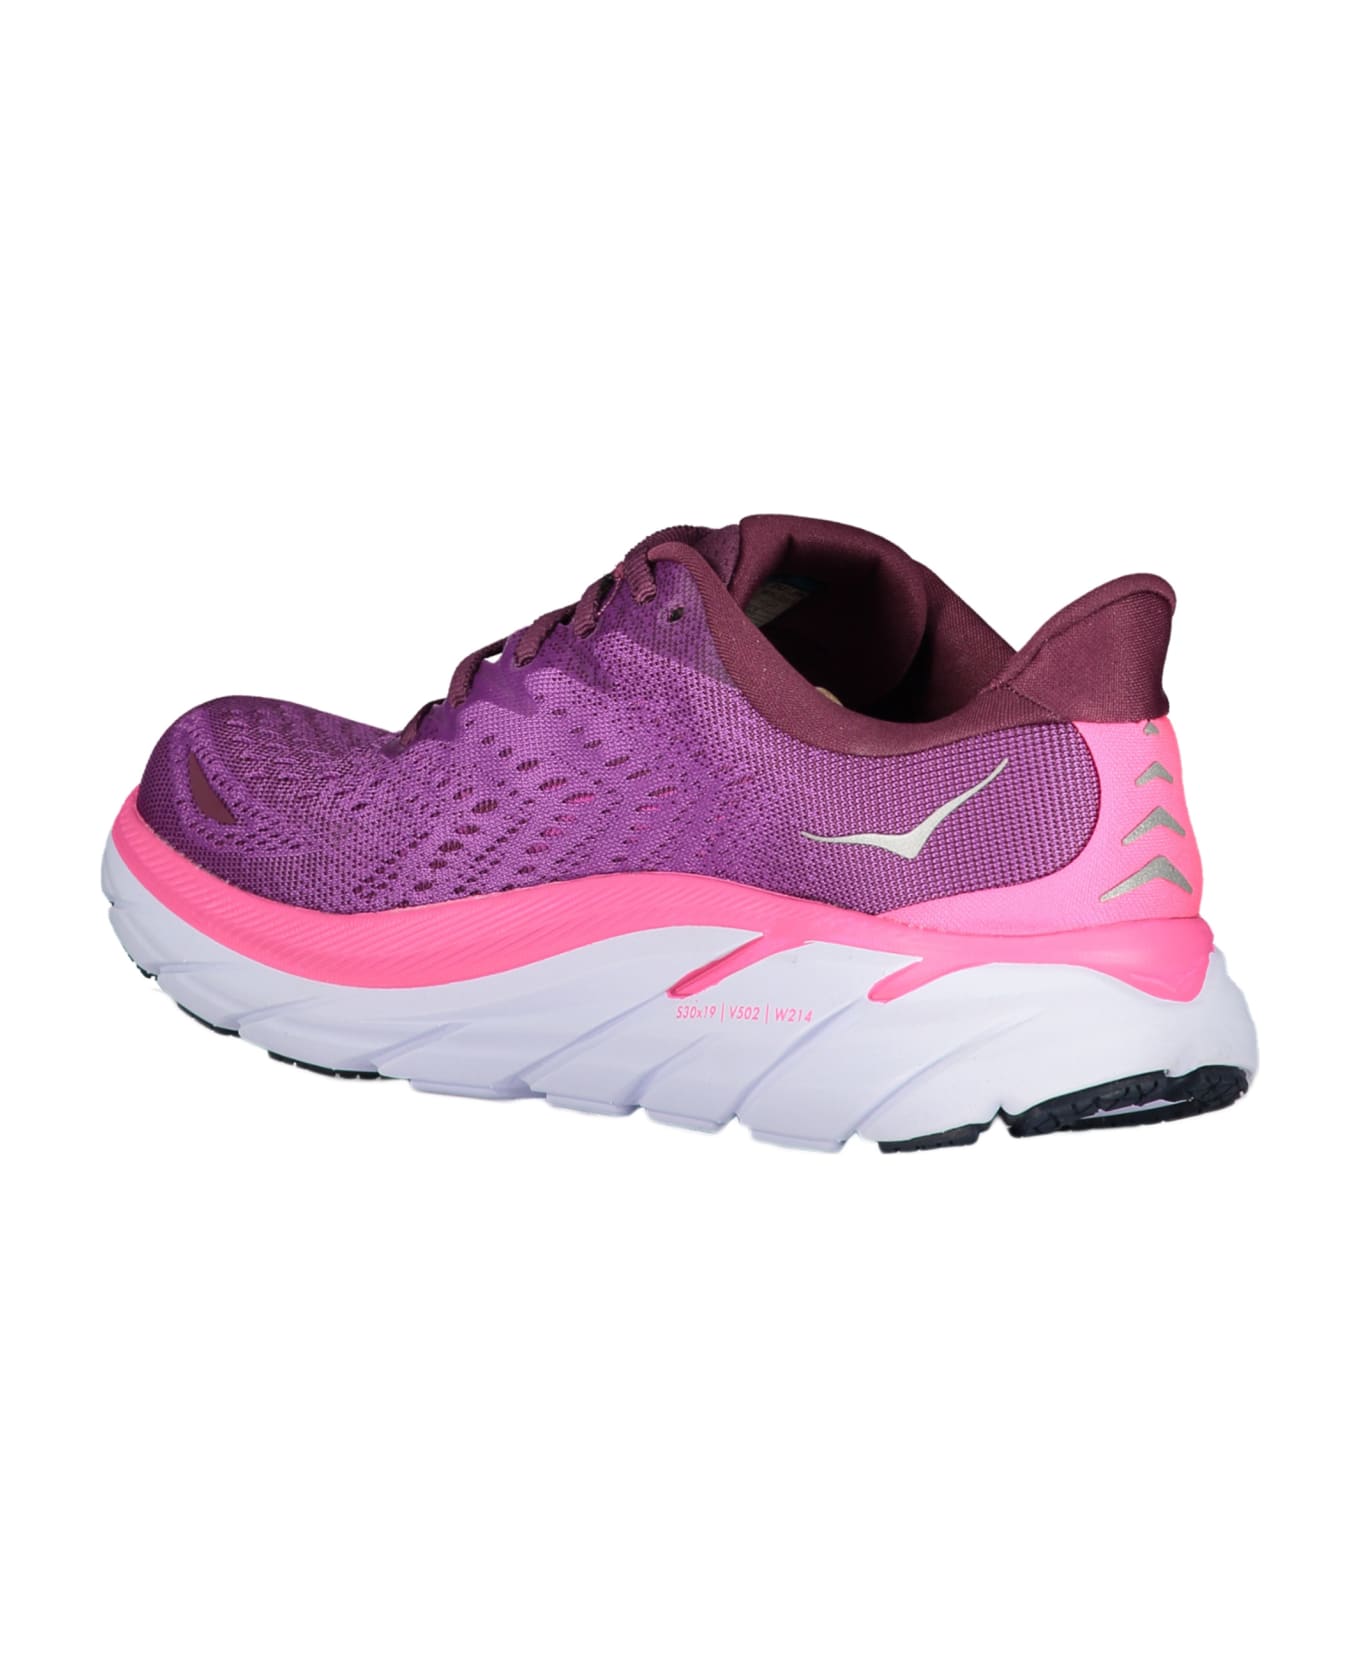 Hoka Low-top Sneakers - Red-purple or grape